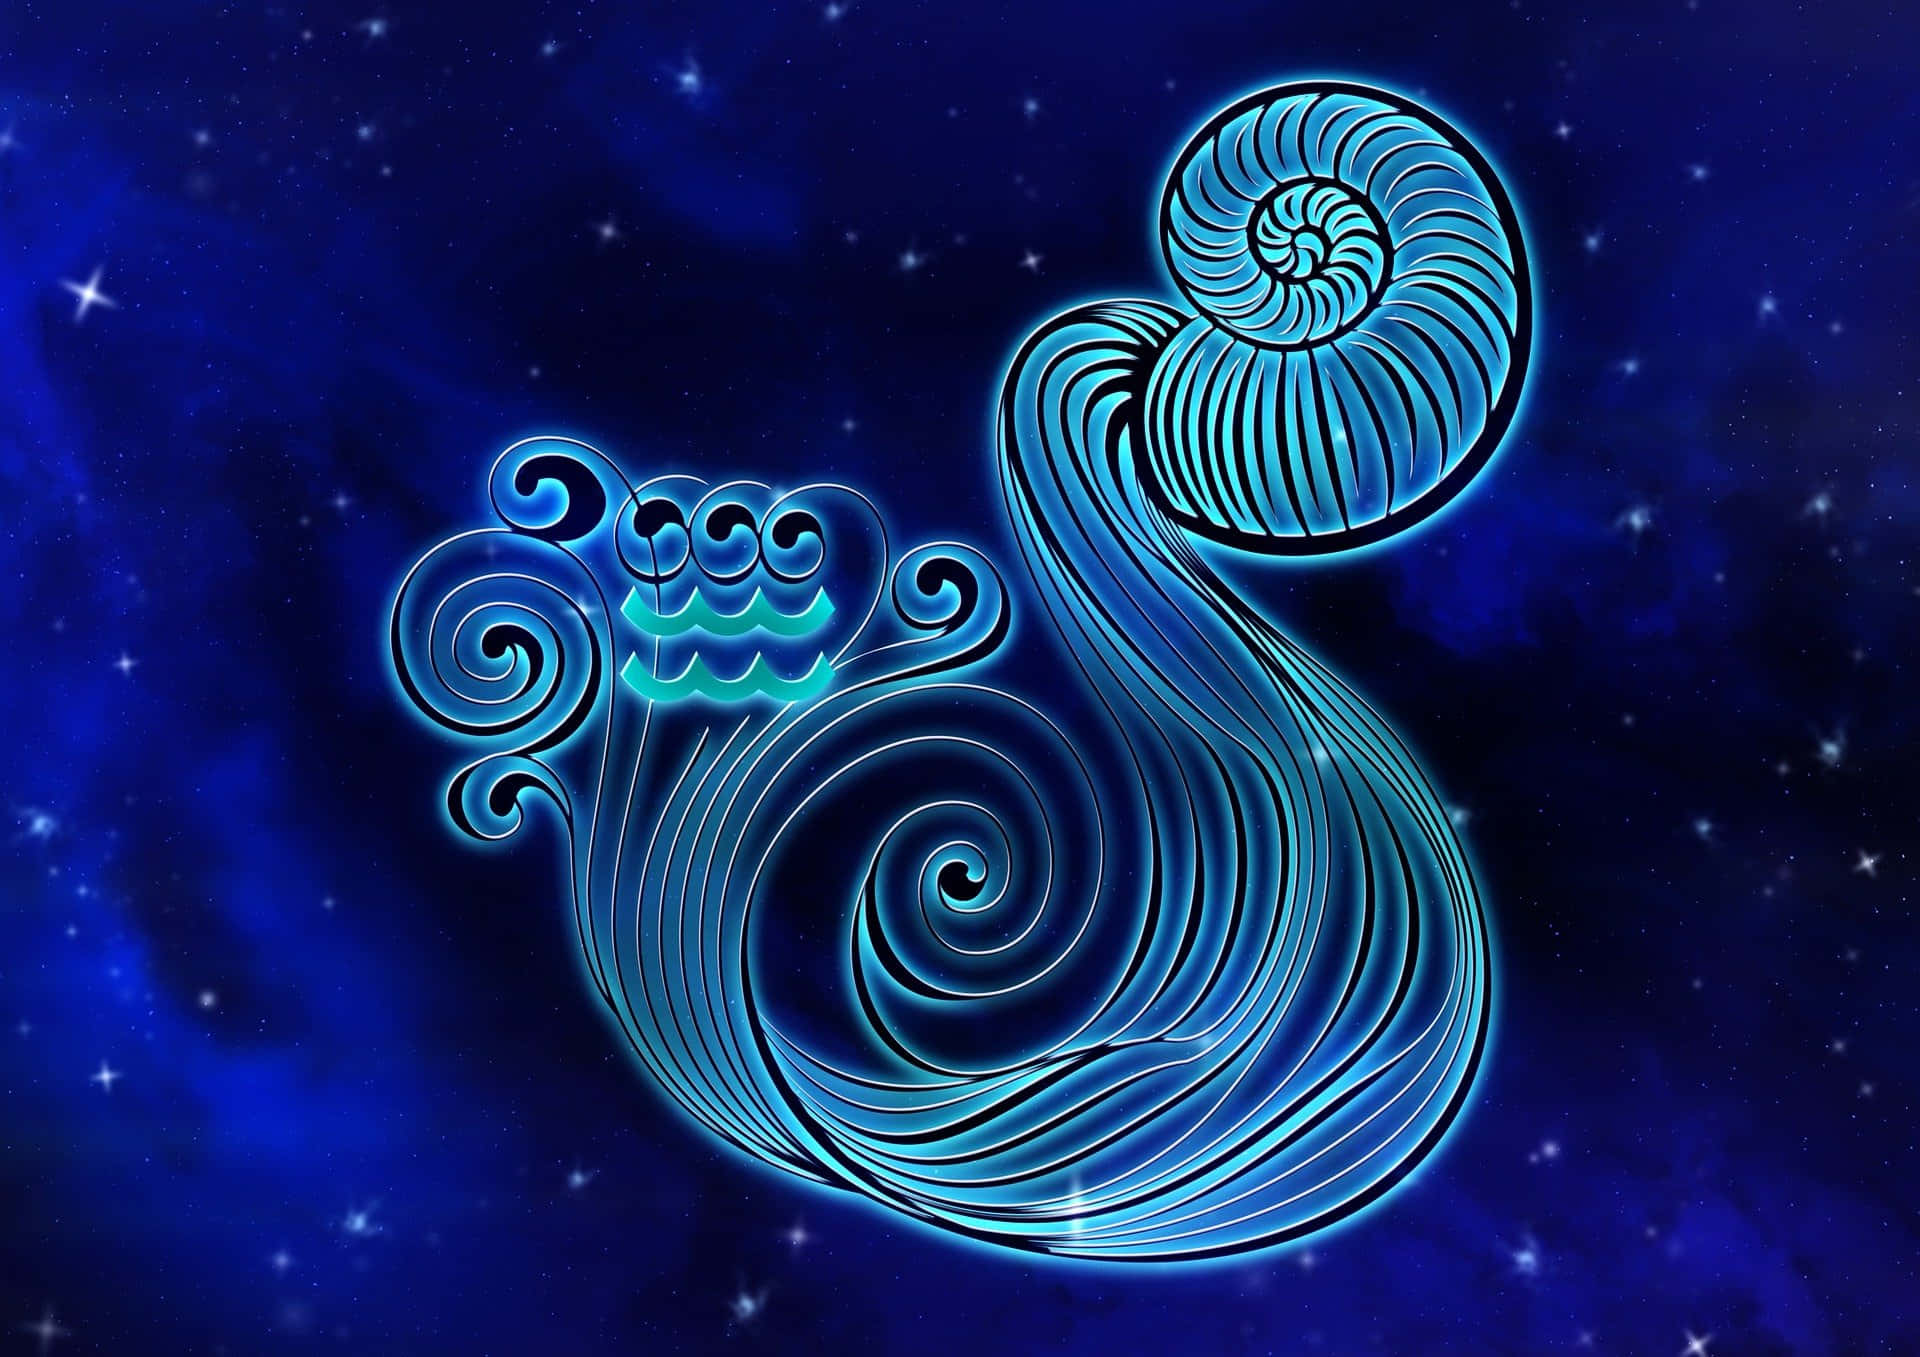 “The Sign of the Water-bearer - Aquarius”